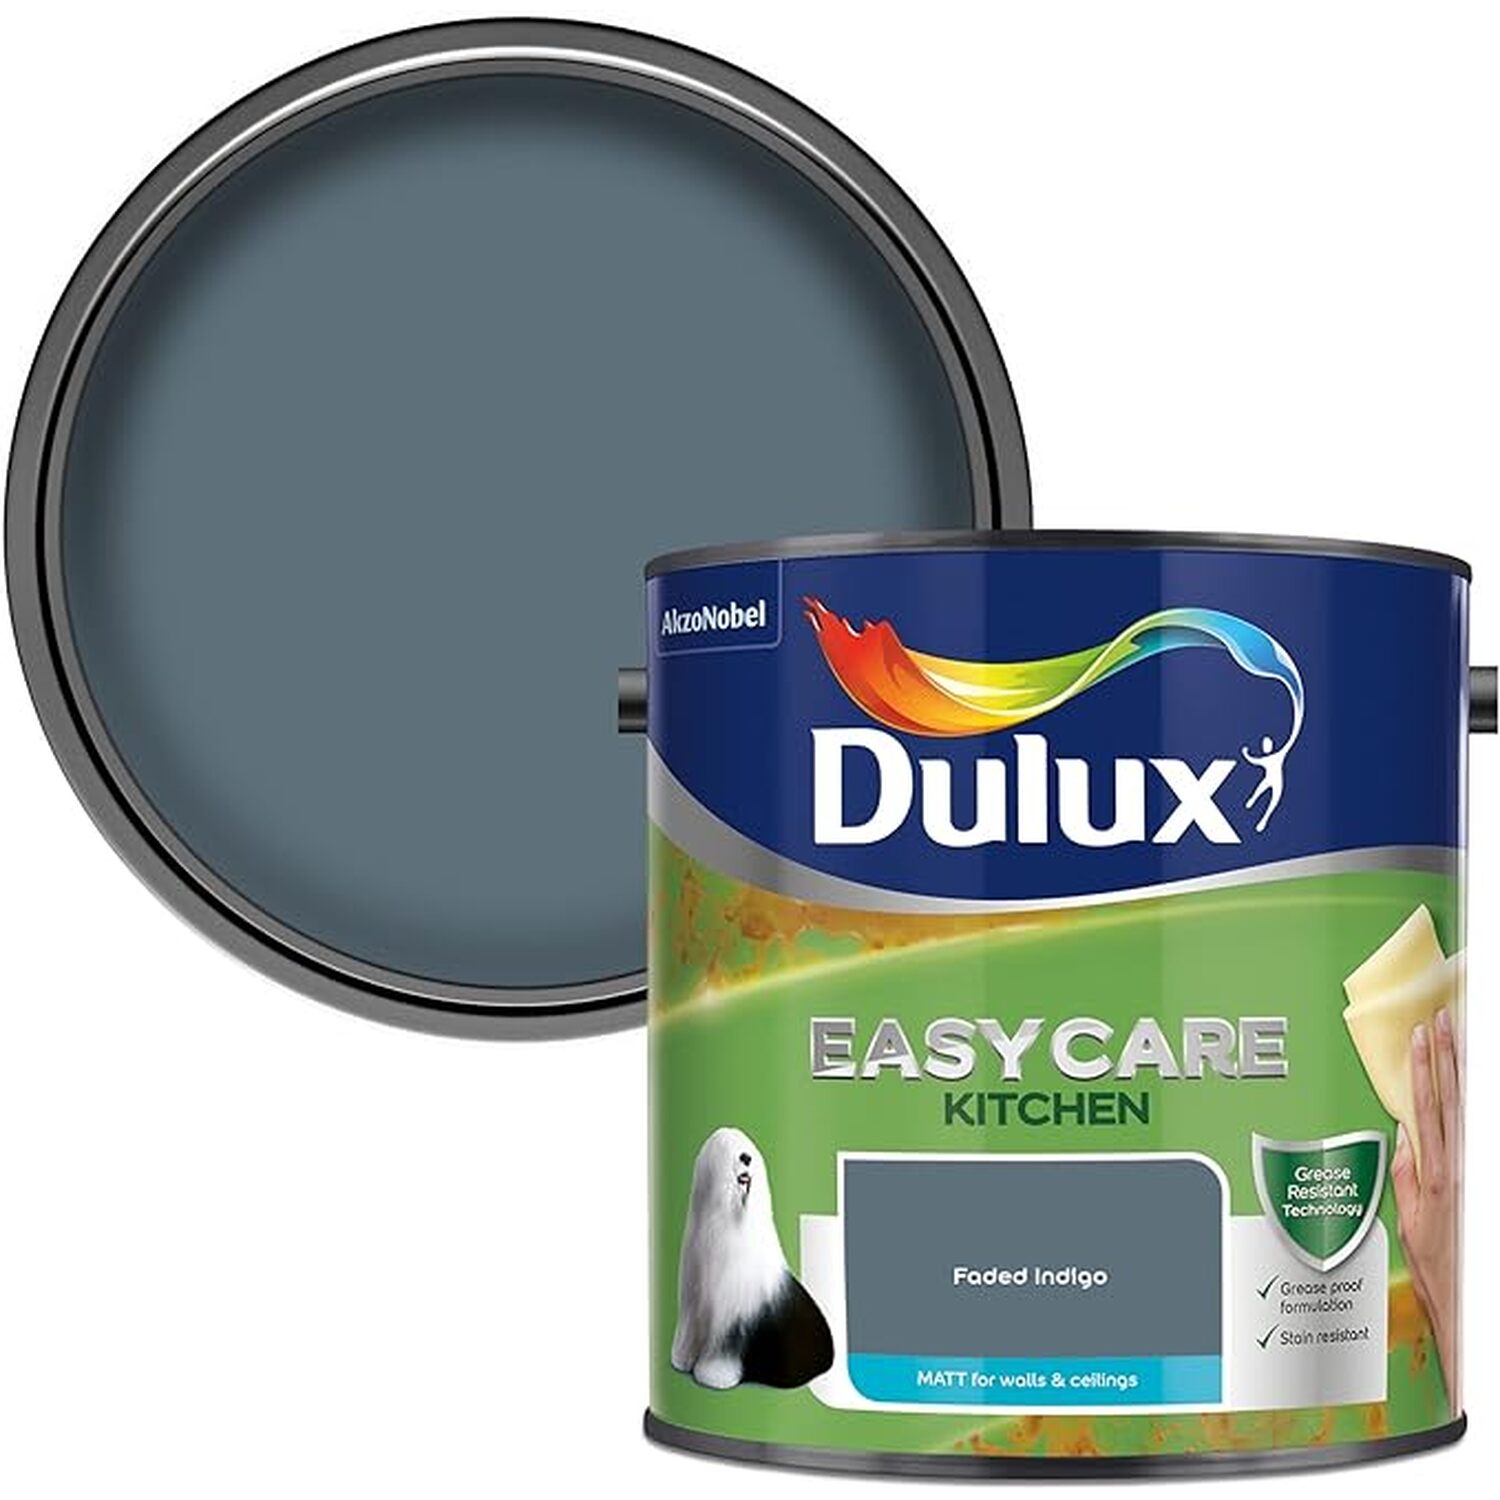 Dulux Easycare Kitchen Faded Indigo Matt Emulsion Paint 2.5L Image 1